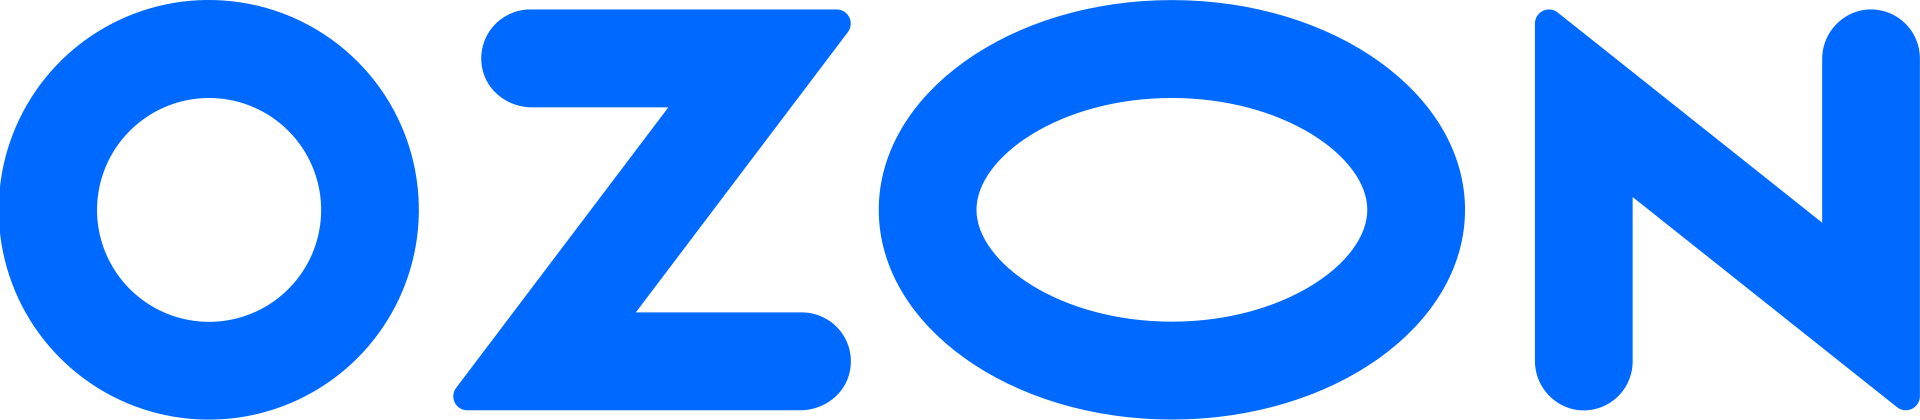 Логотип интернет-магазин OZON wikipedia.org